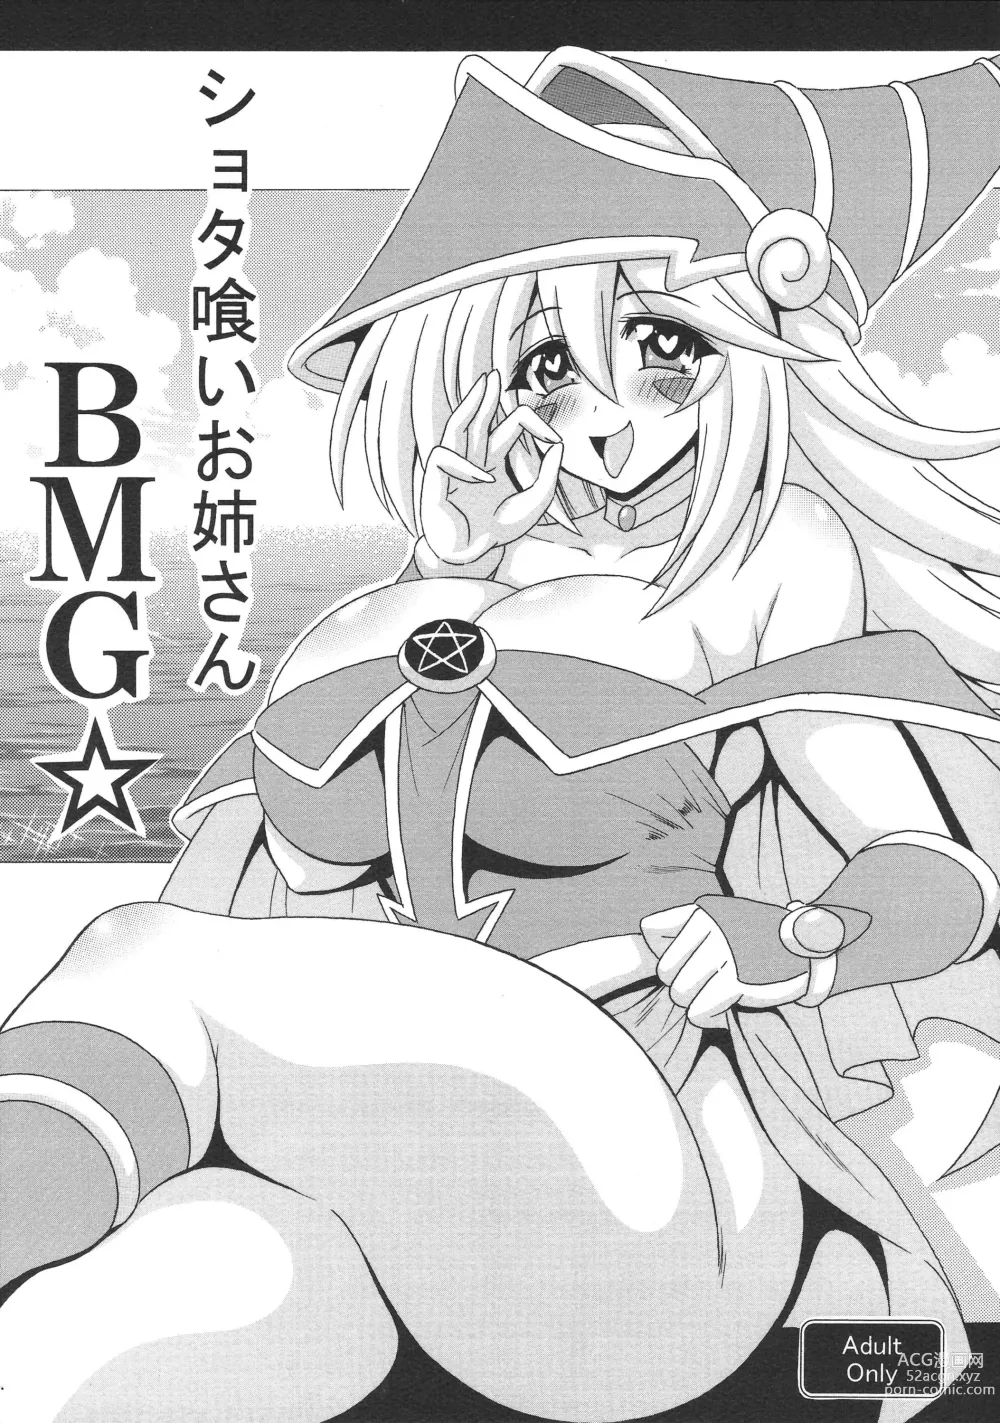 Page 1 of doujinshi Shotagui Onee-san BMG